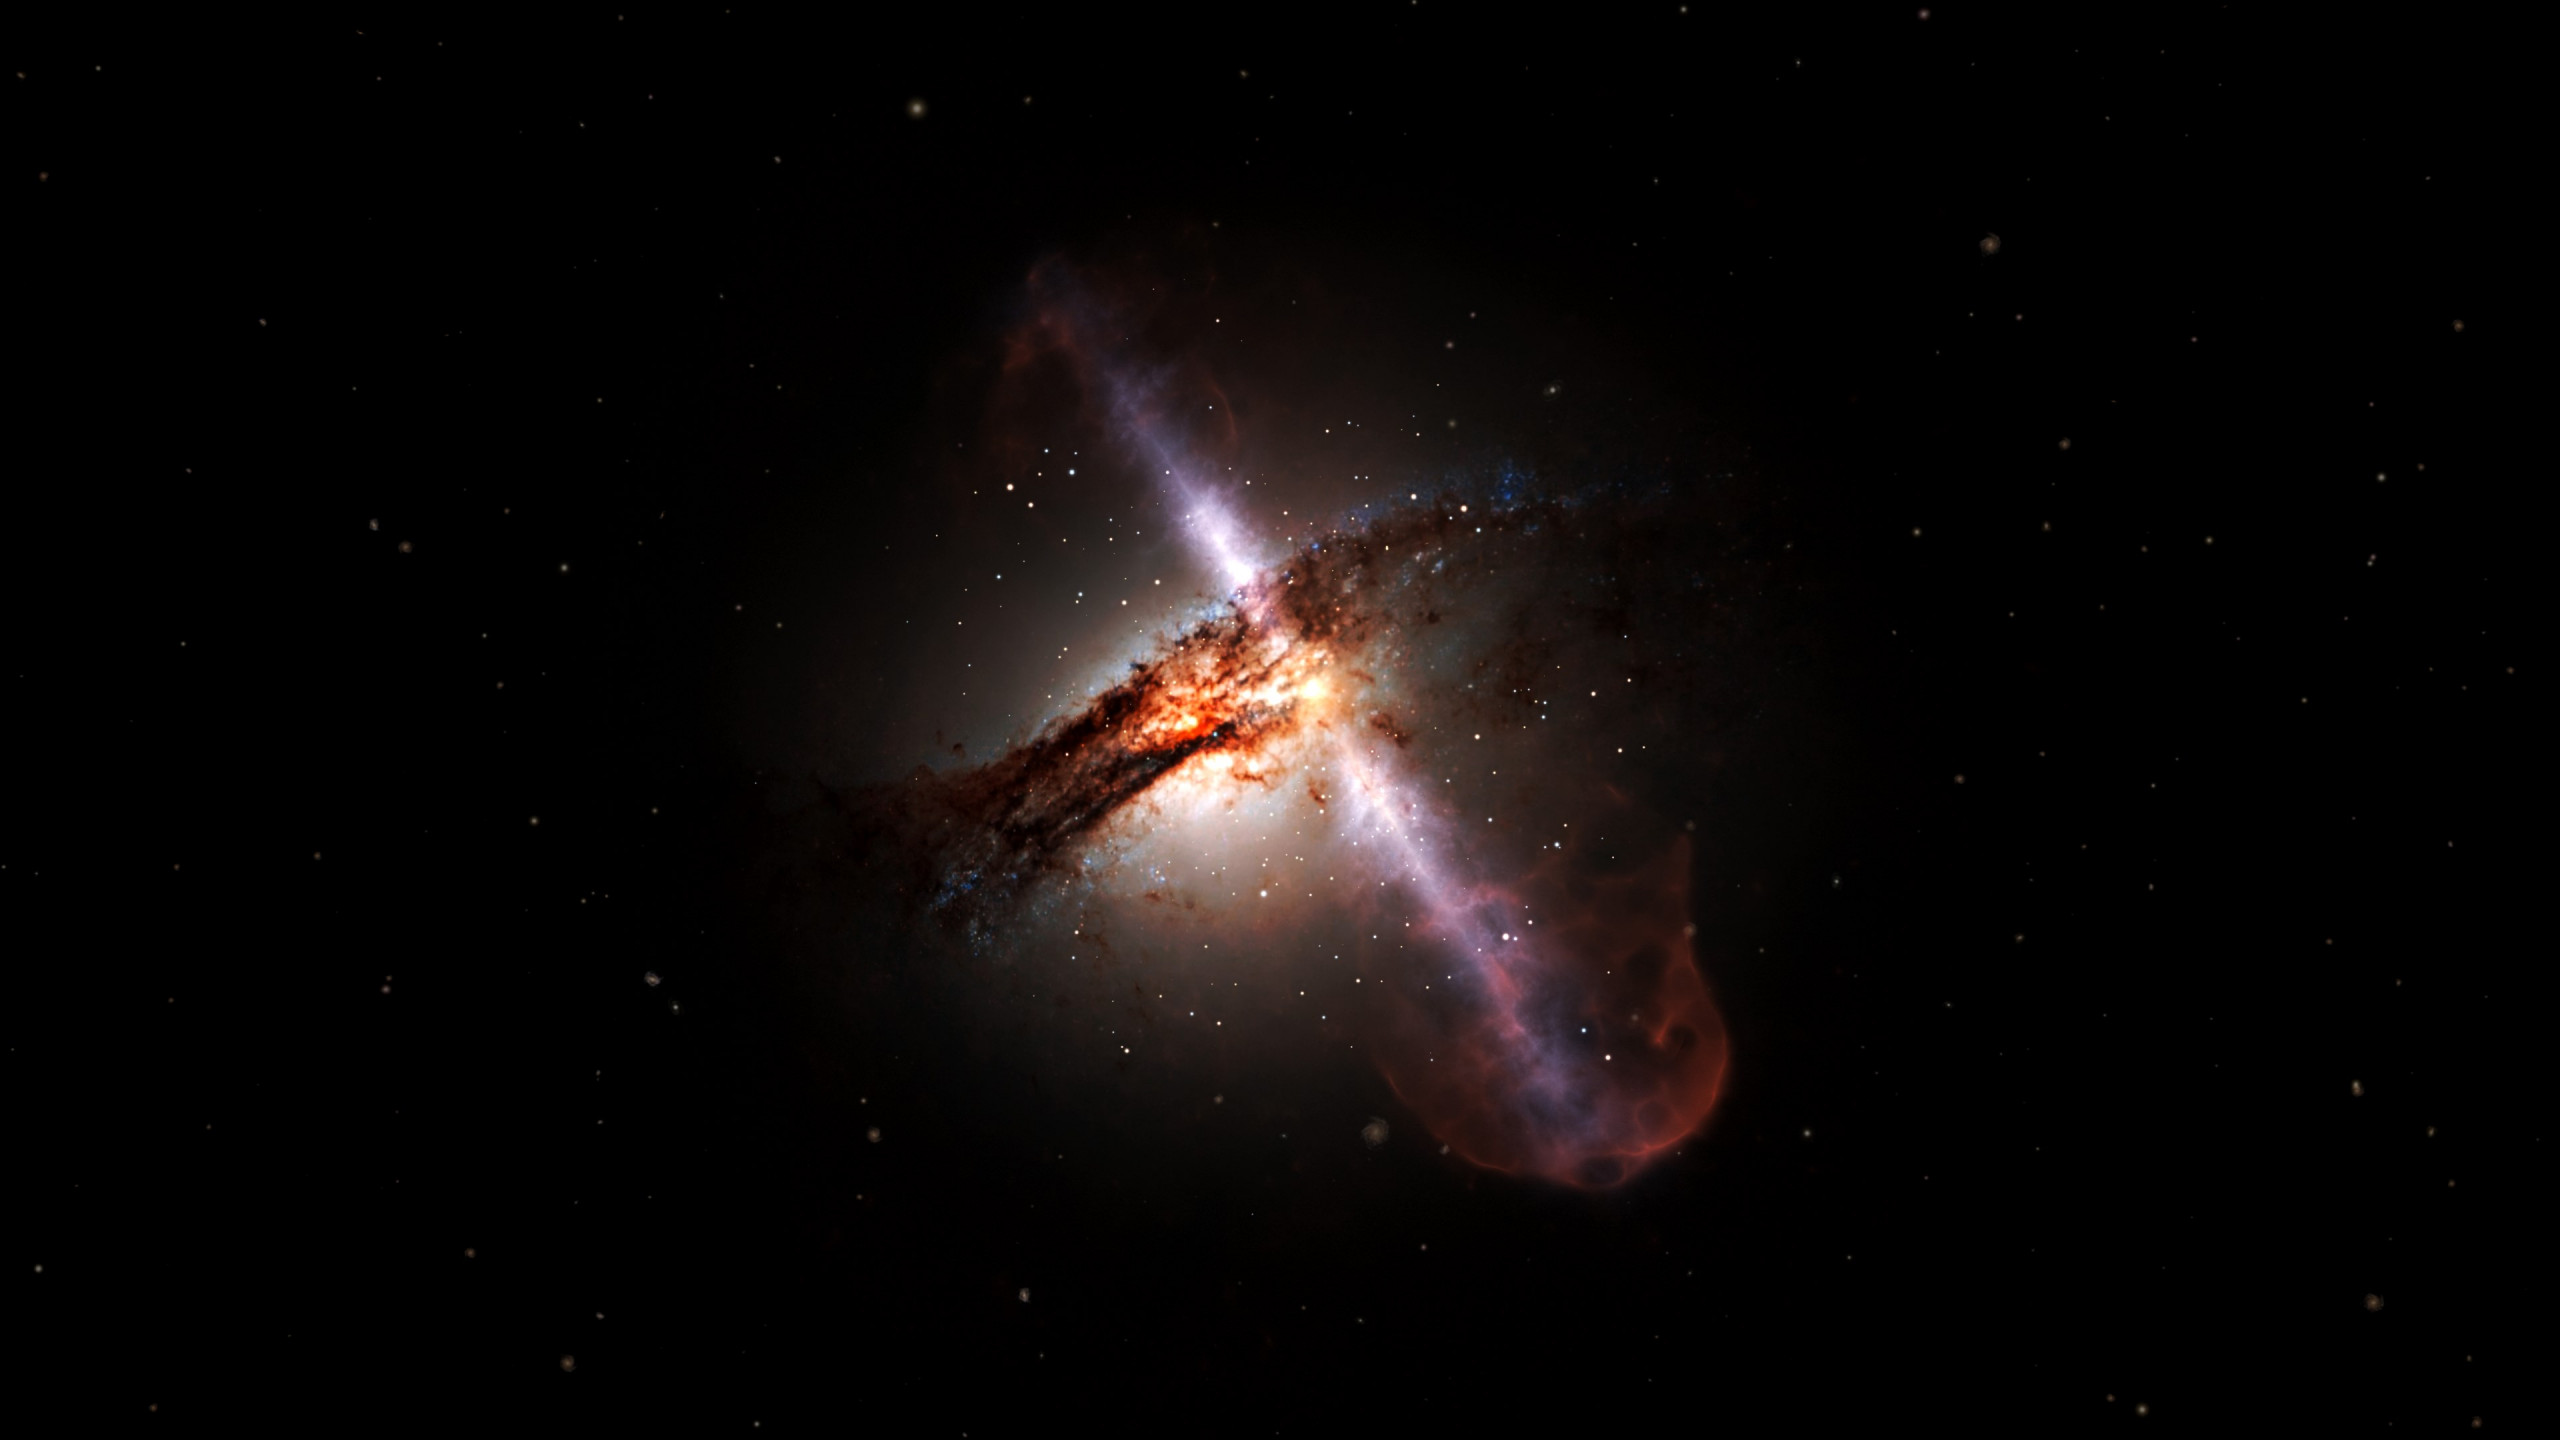 Supermassive black hole wallpaper 2560x1440